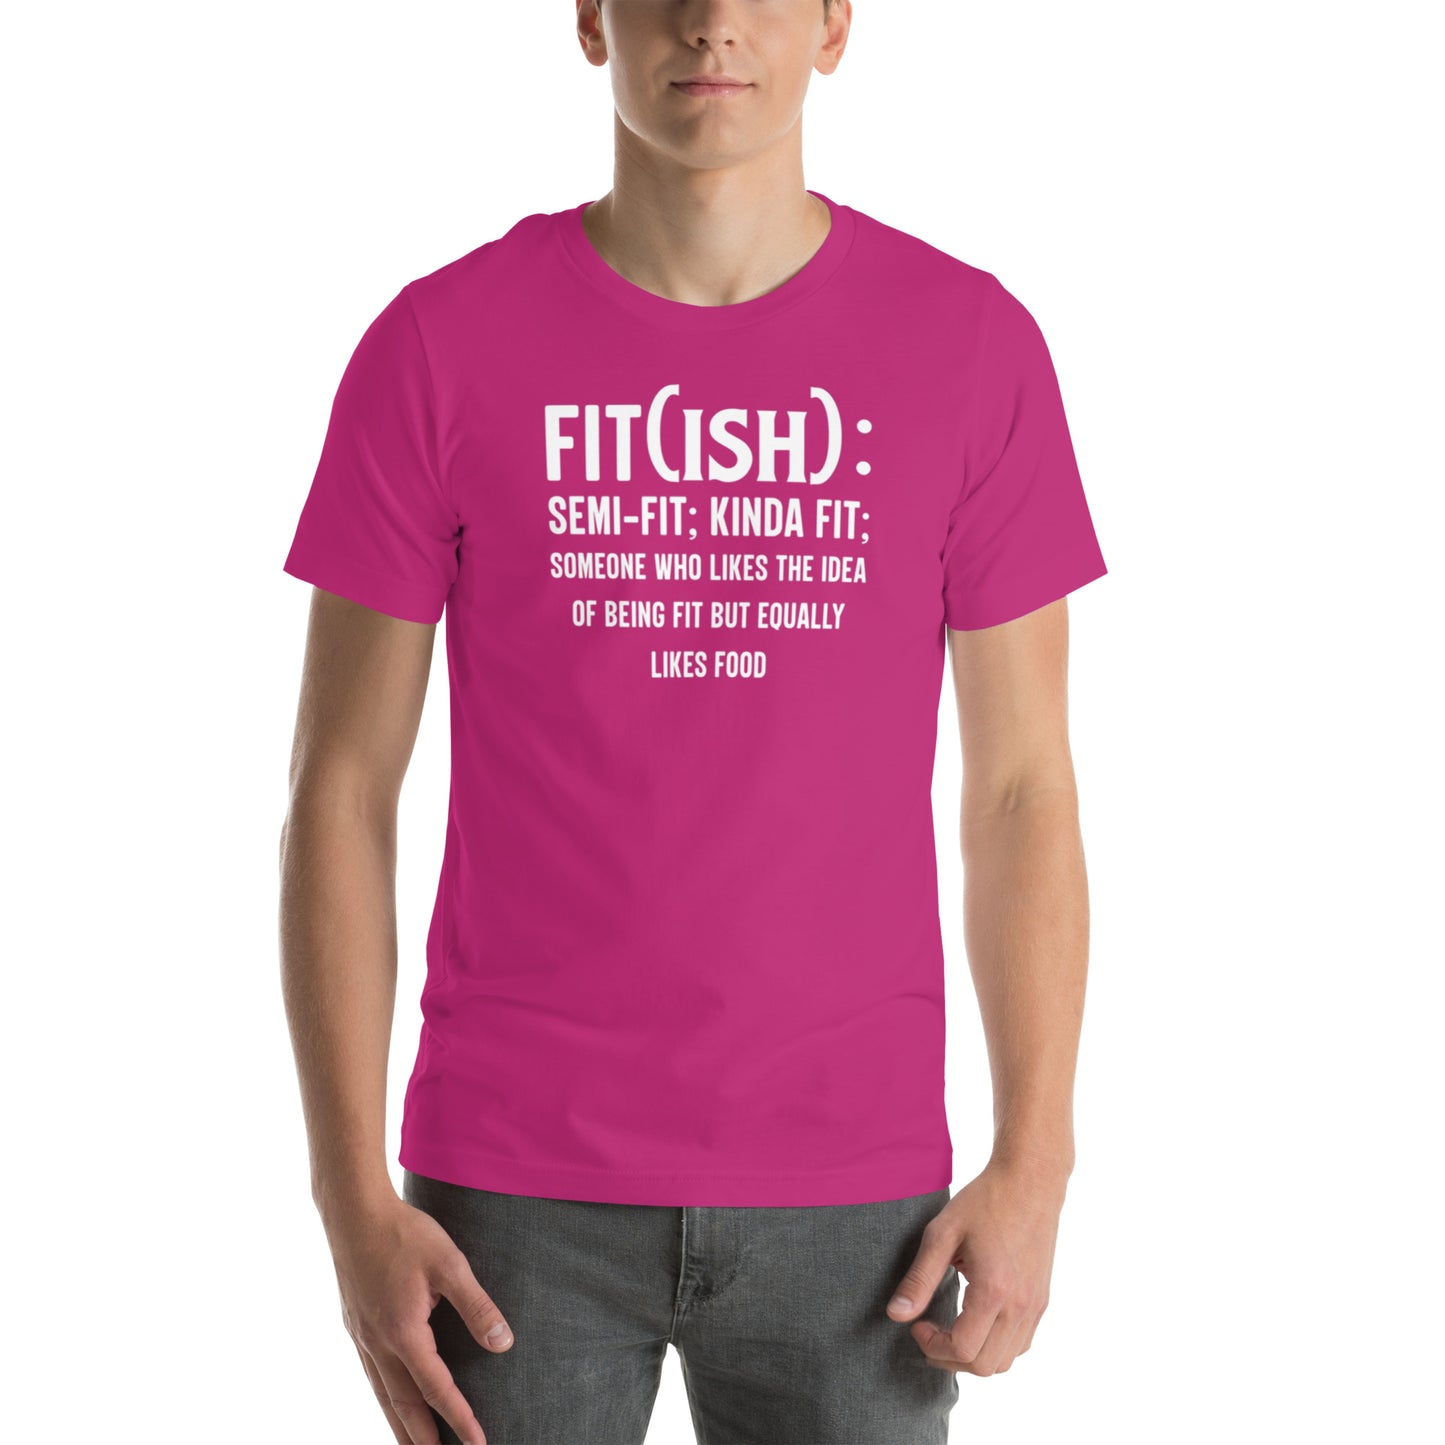 FIT (ish) Unisex t-shirt